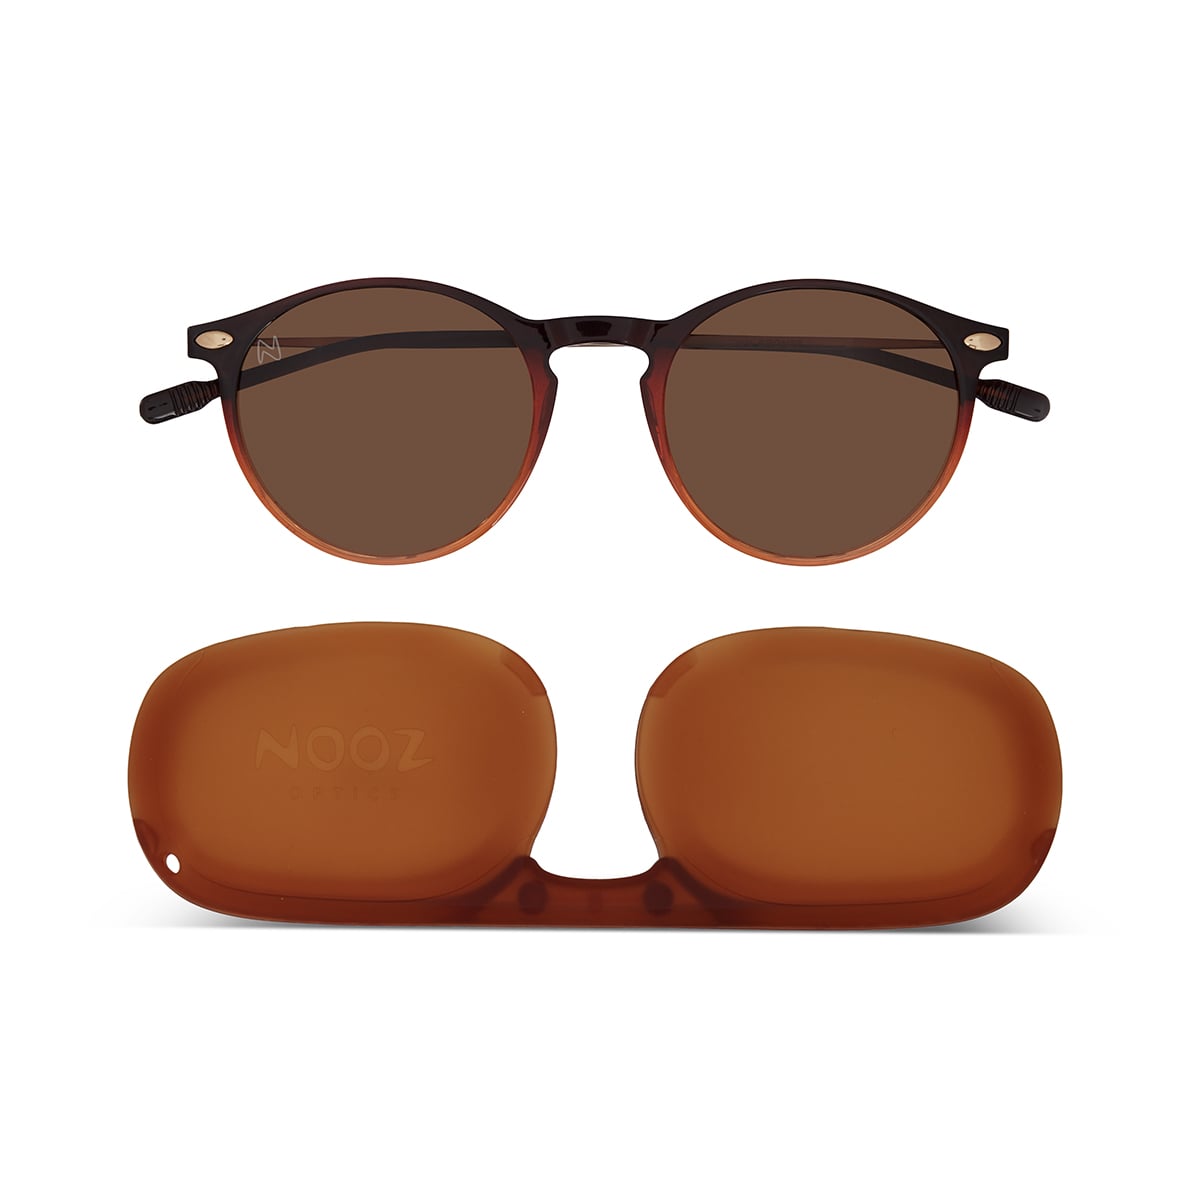 Nooz - Sunglasses - Cruz - Brown Bronze